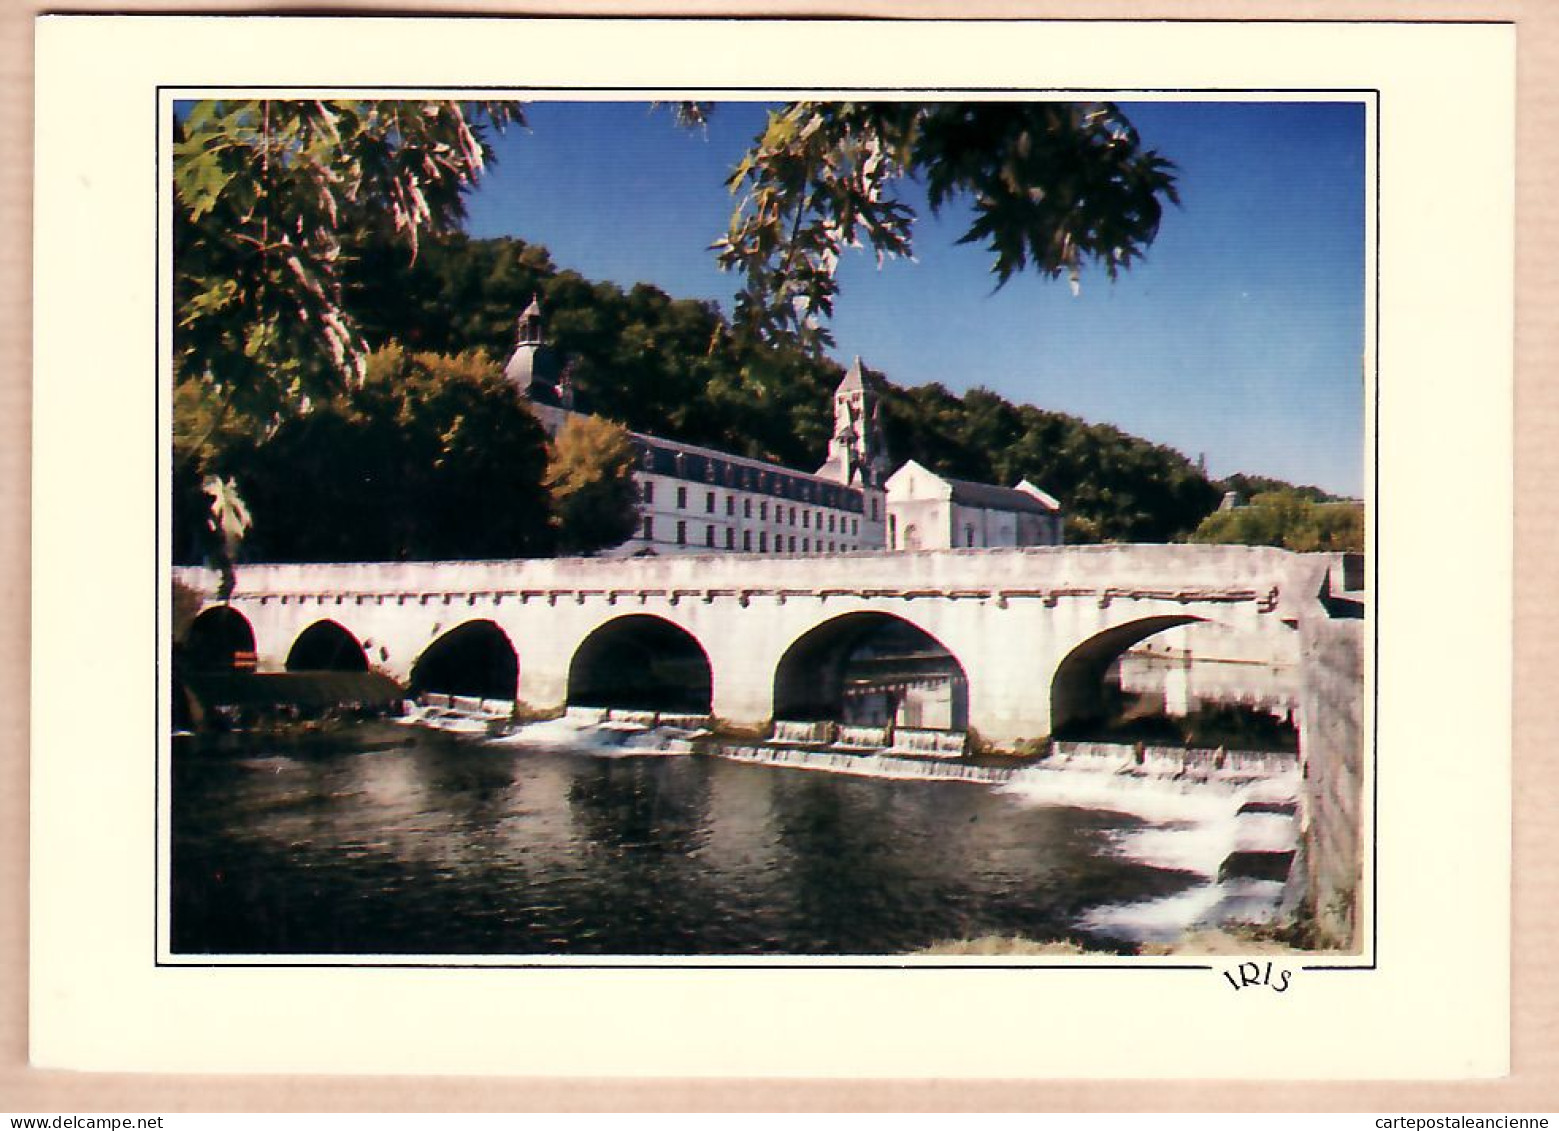 01190 / BRANTOME Ancienne Abbaye CHARLEMAGNE Pont XVIe DROMME 1990s DORDOGNE Reflets PERIGORD - ANGER THEOJAC IRIS 8043 - Brantome